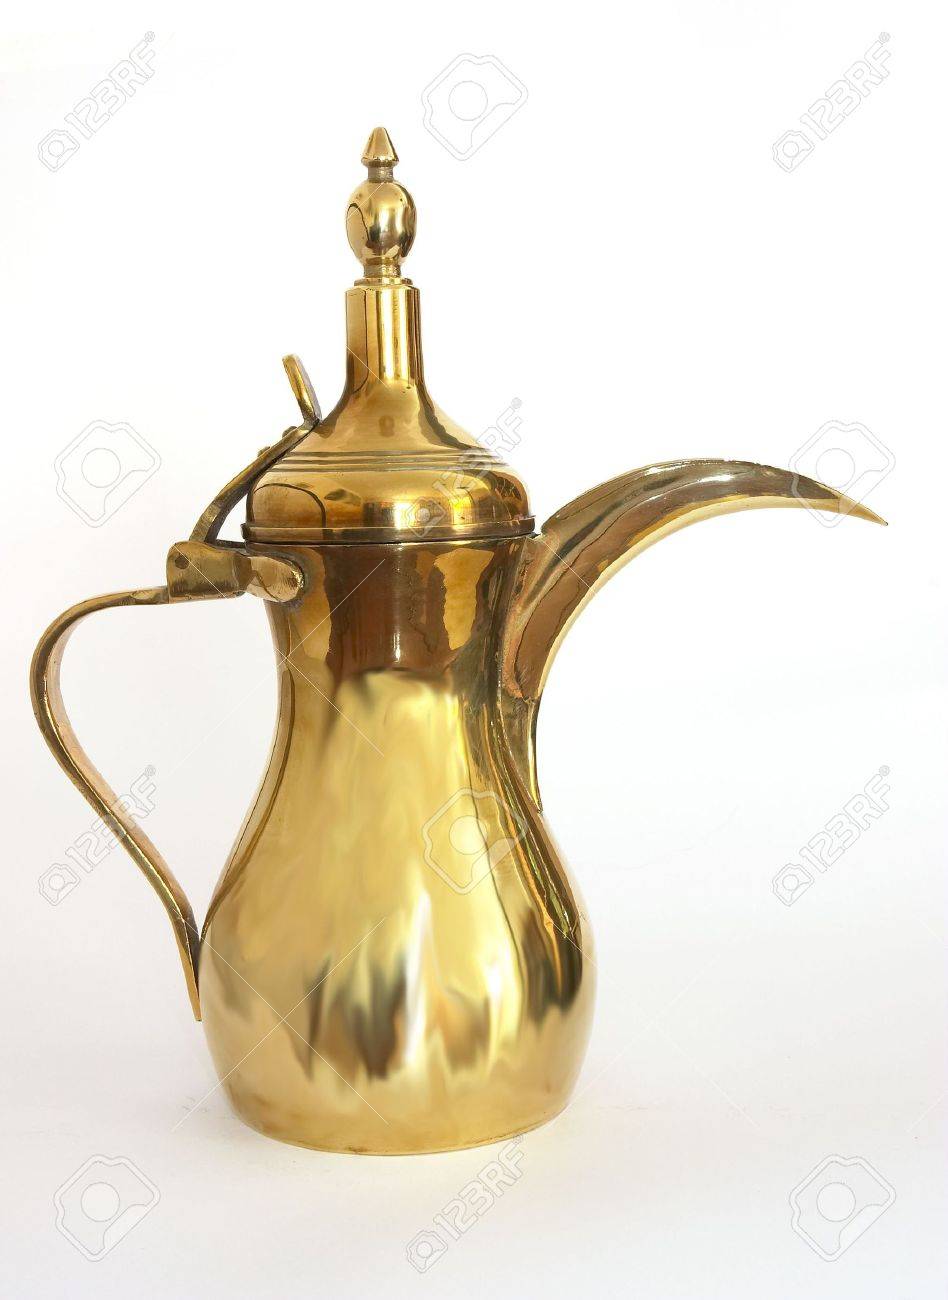 261964-arabian-coffee-pot-or-dallah-a-symbol-of-welcome.jpg